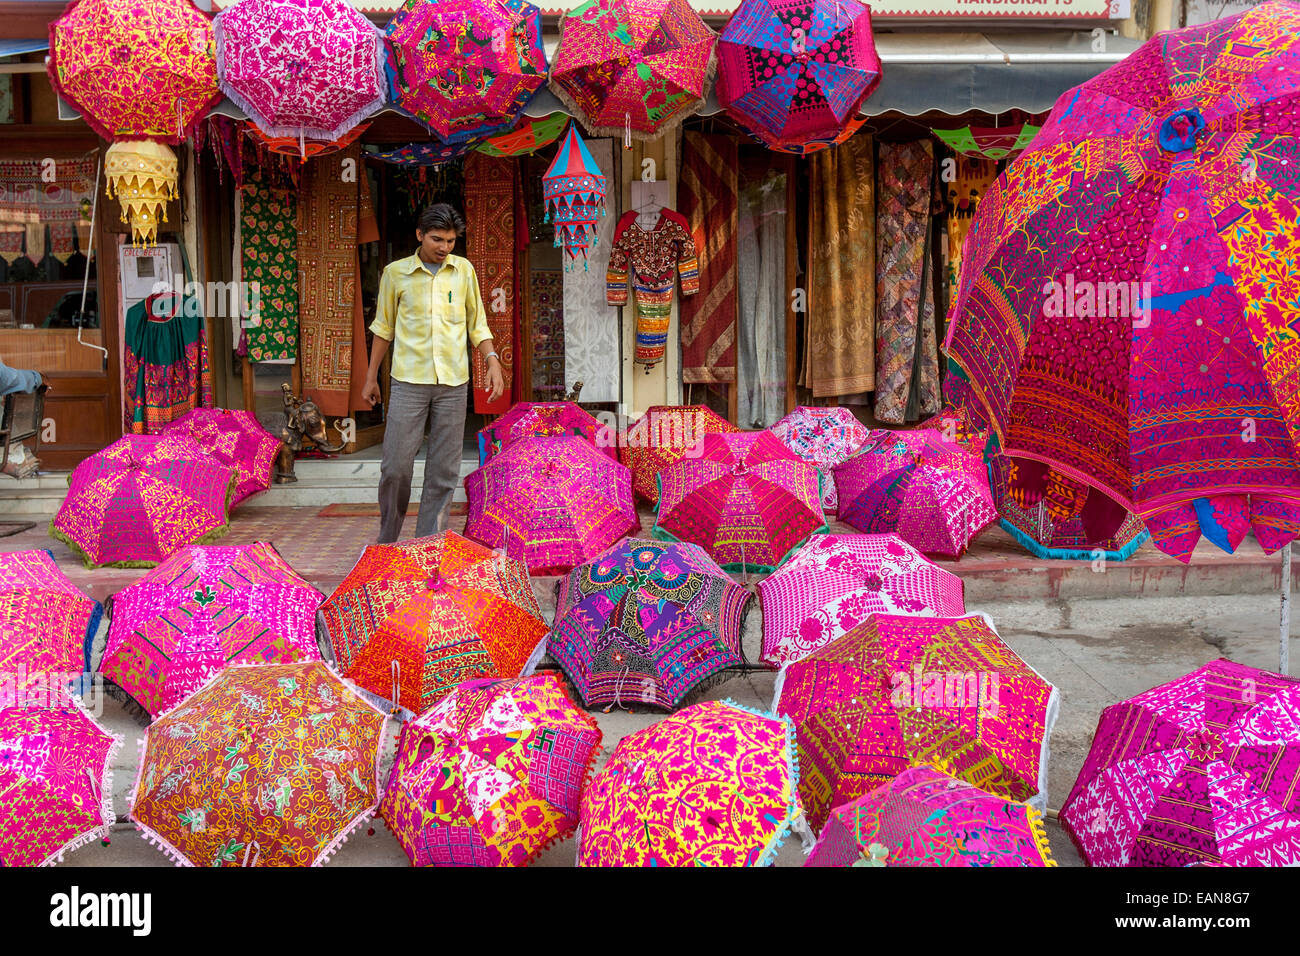 Jaipur umbrella parasol shop hi-res stock photography and images - Alamy